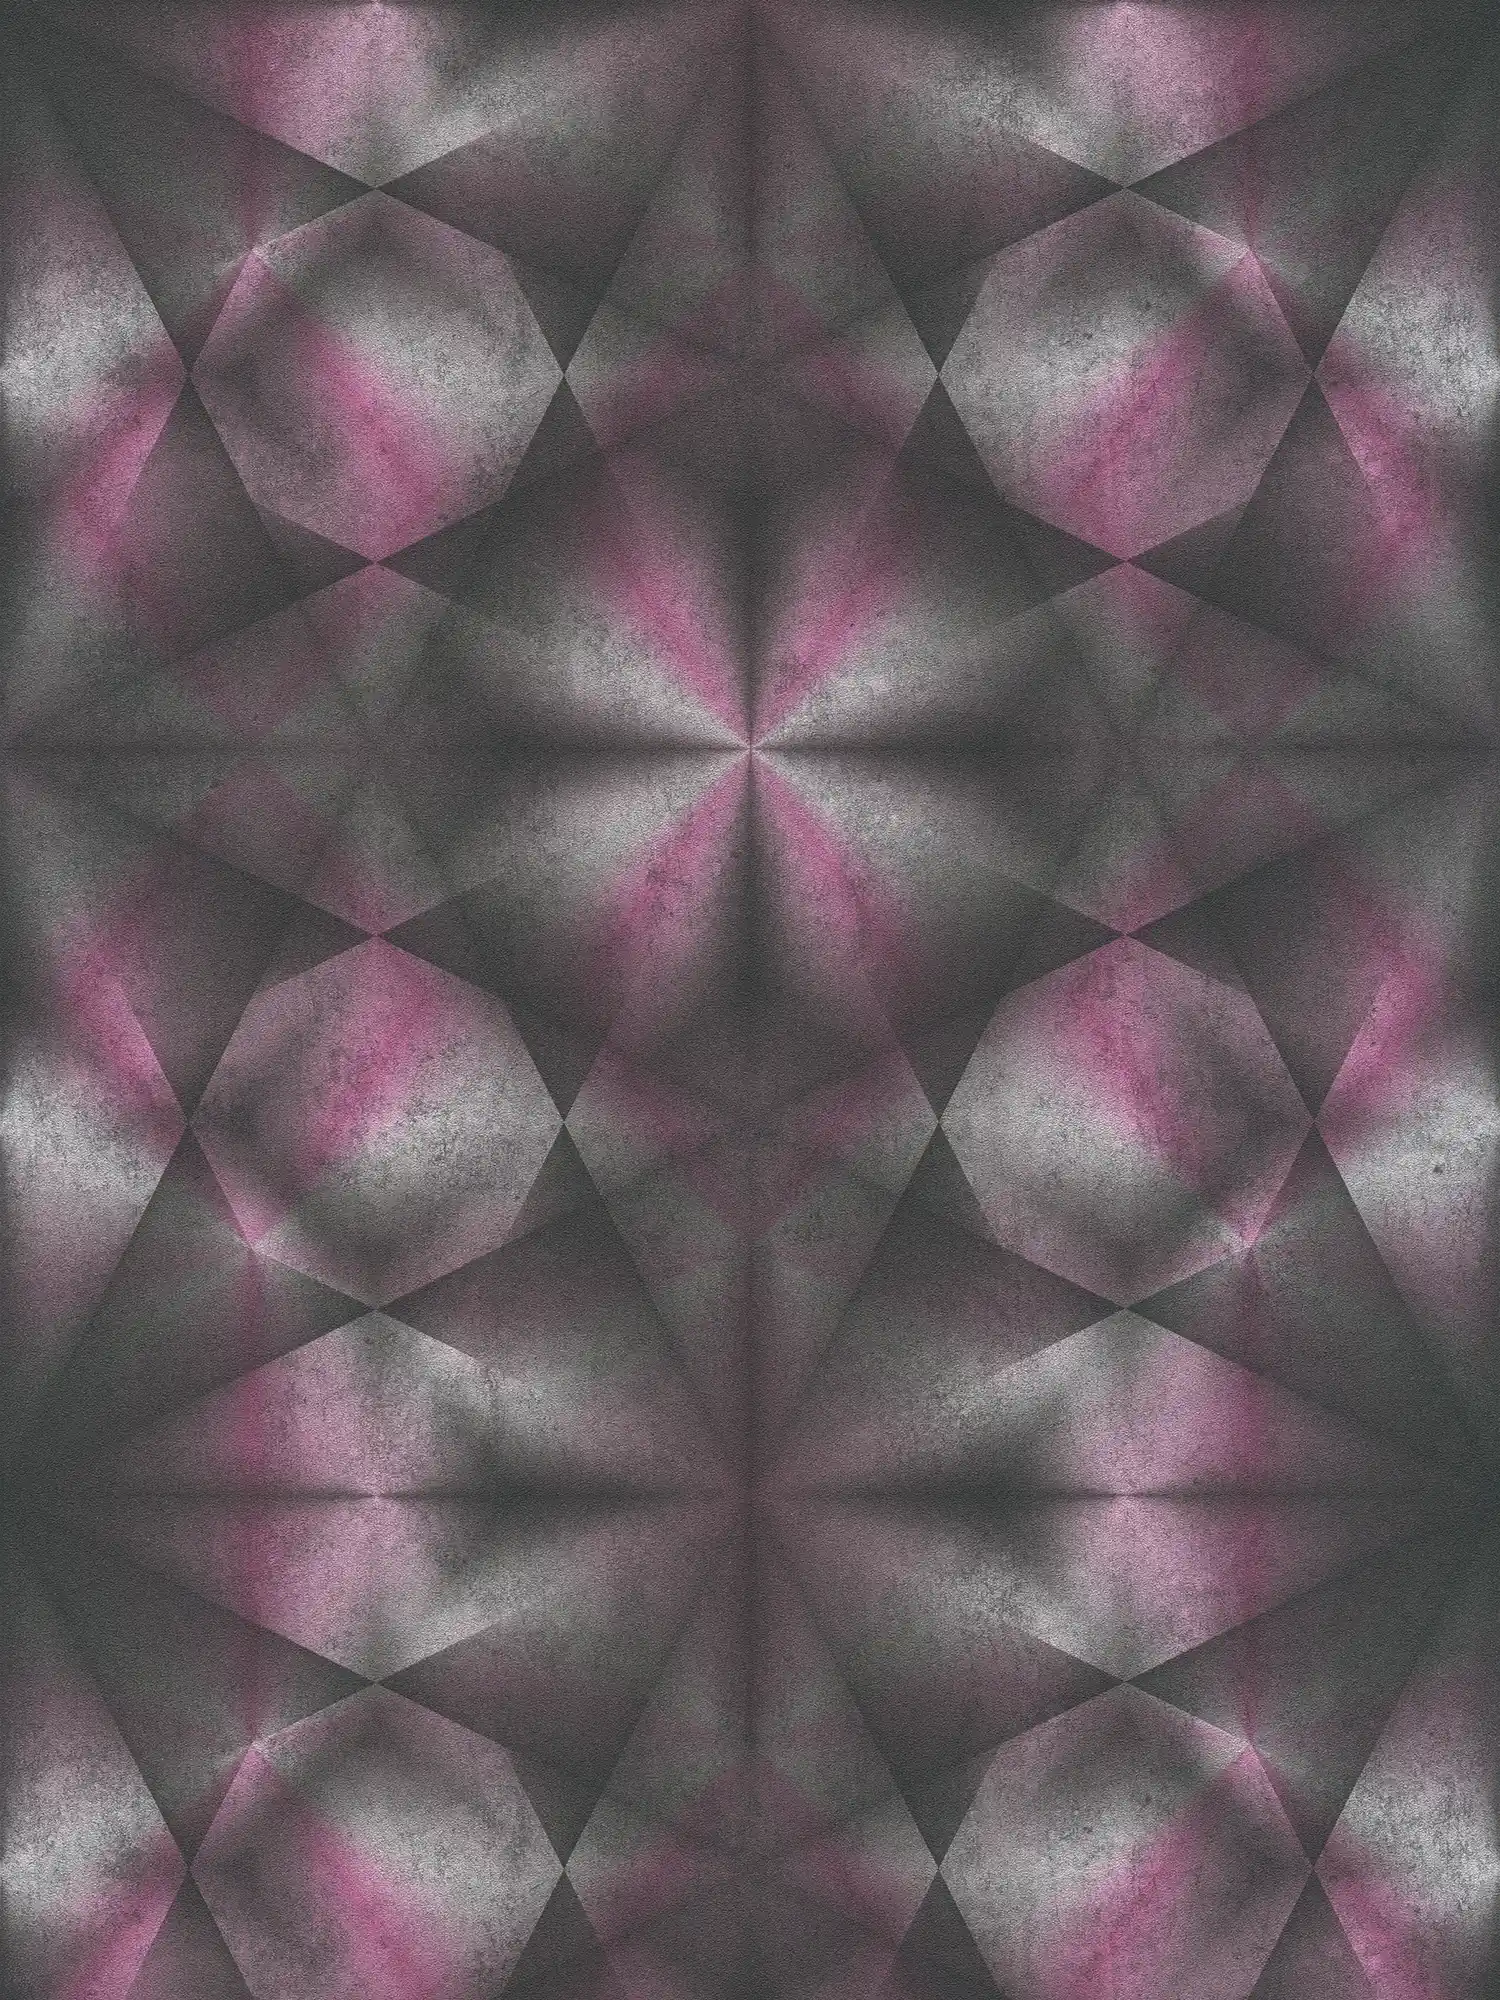 Design wallpaper with concrete look & graphic pattern - purple, grey, black
